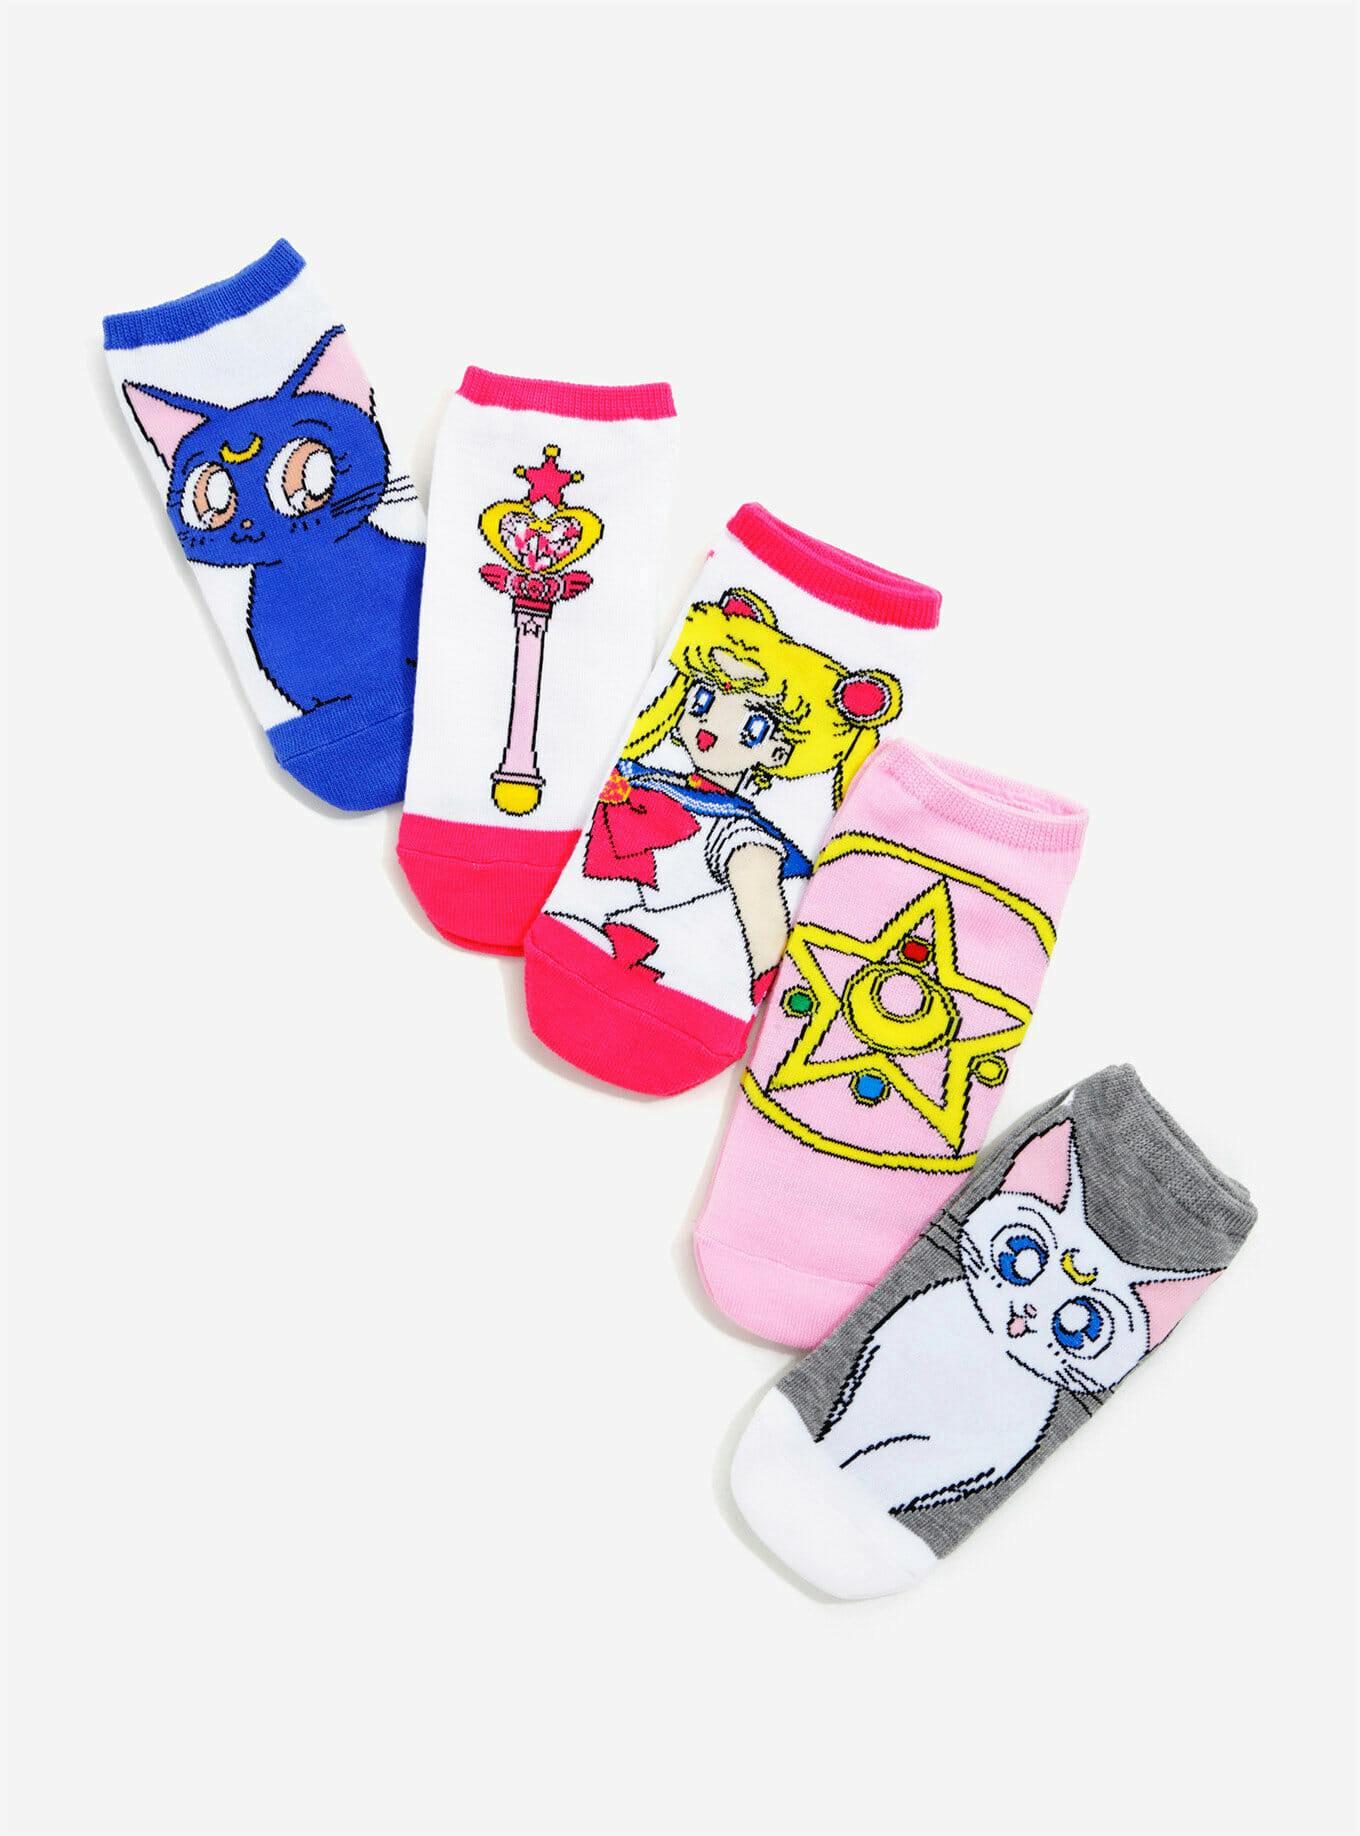 sailor moon socks